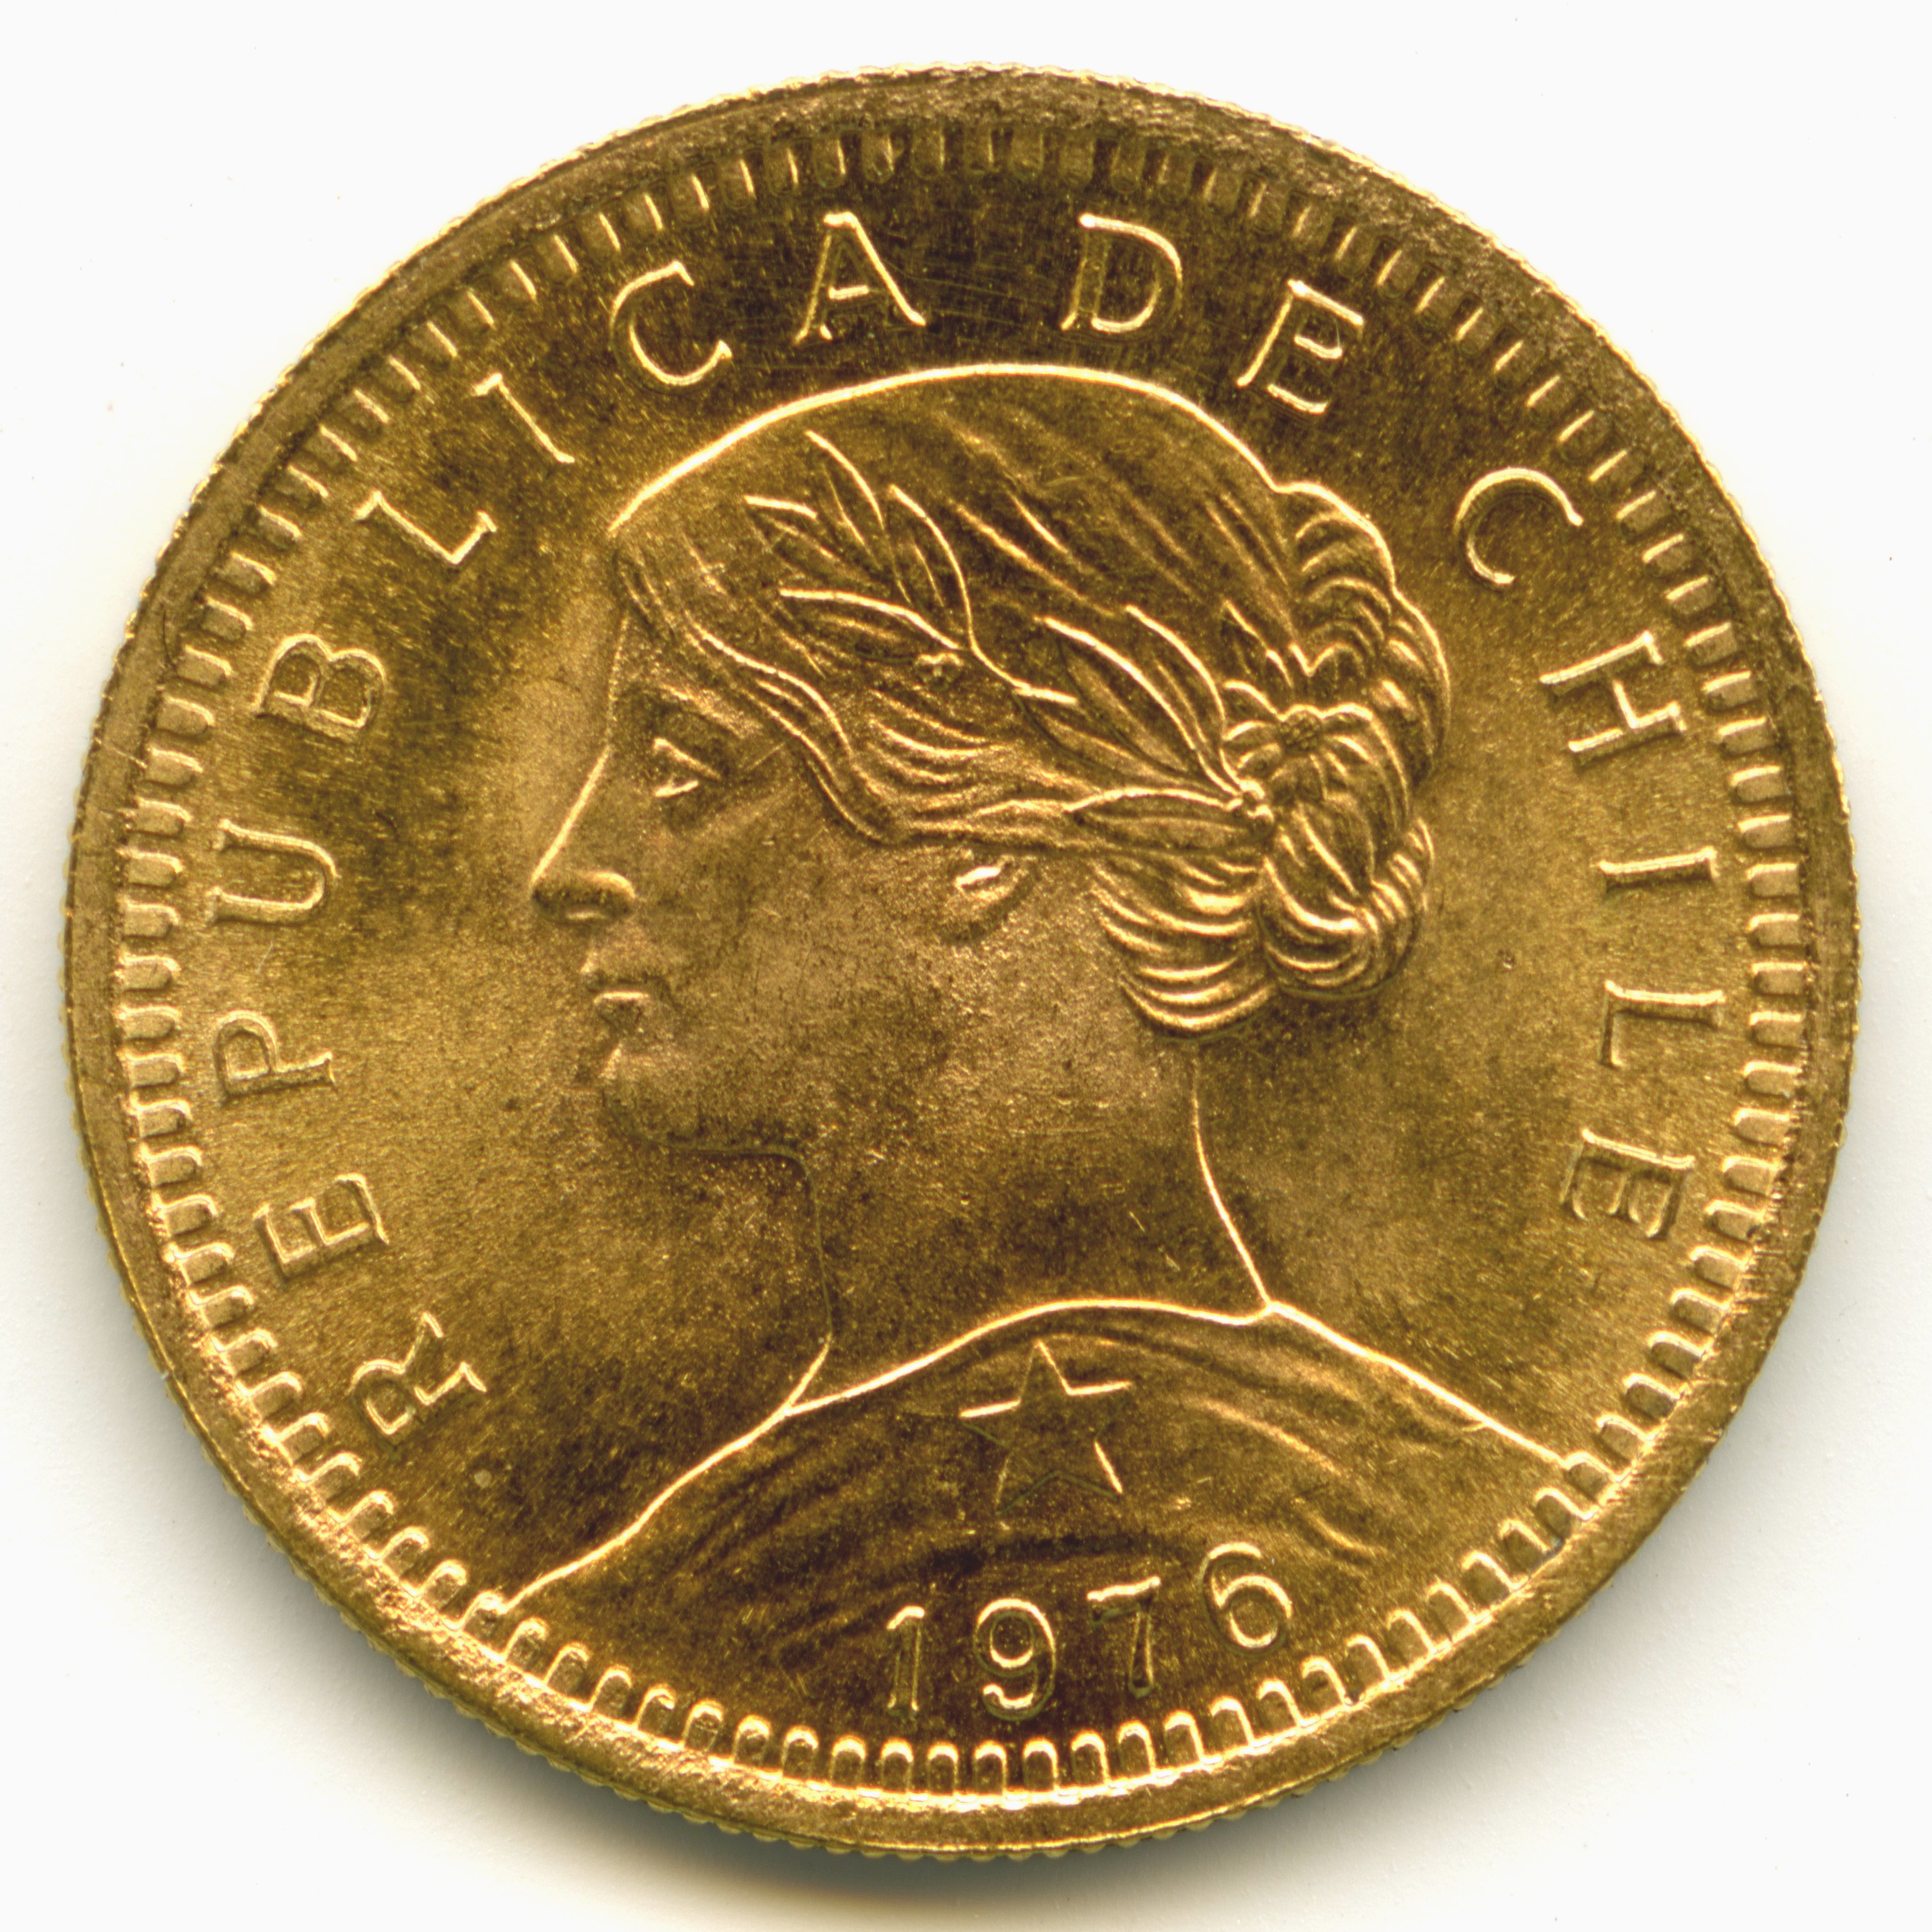 Chili - 20 Pesos - 1976 avers